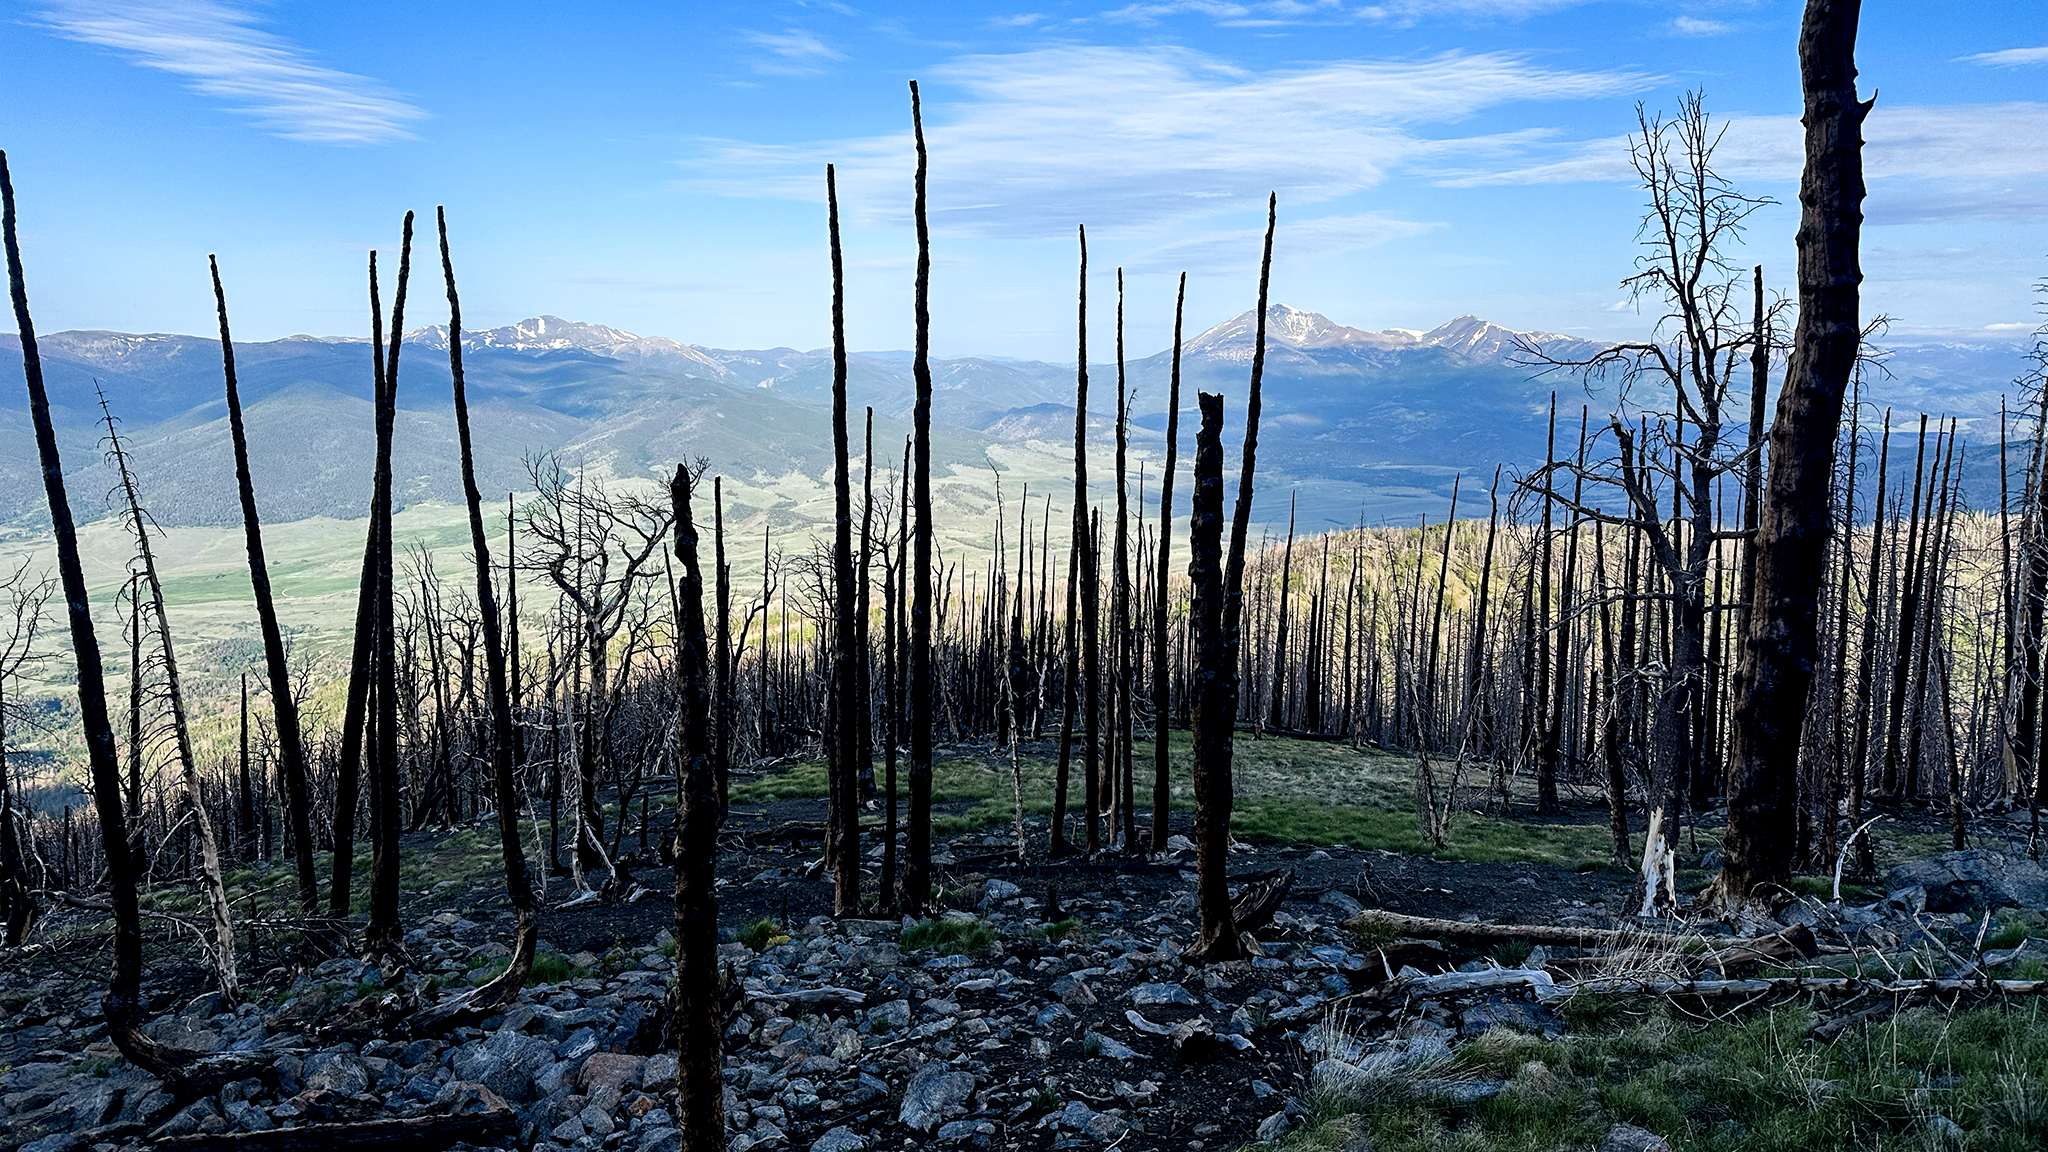 The very surreal burn area between Simmons Peak and Methodist Mountain